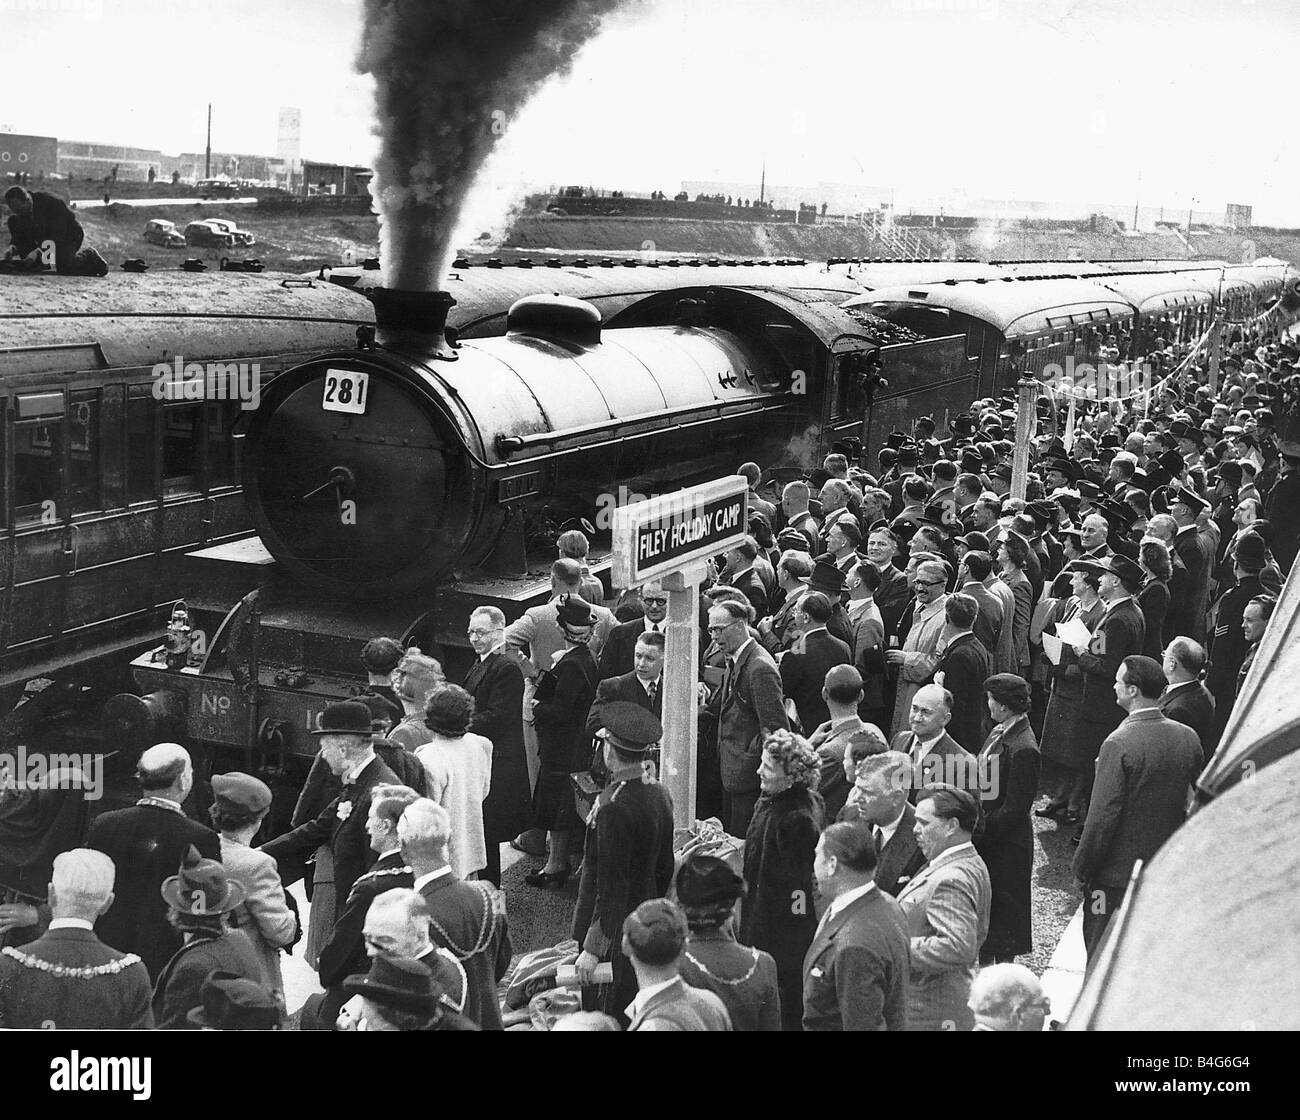 Midland railway Black and White Stock Photos & Images - Alamy